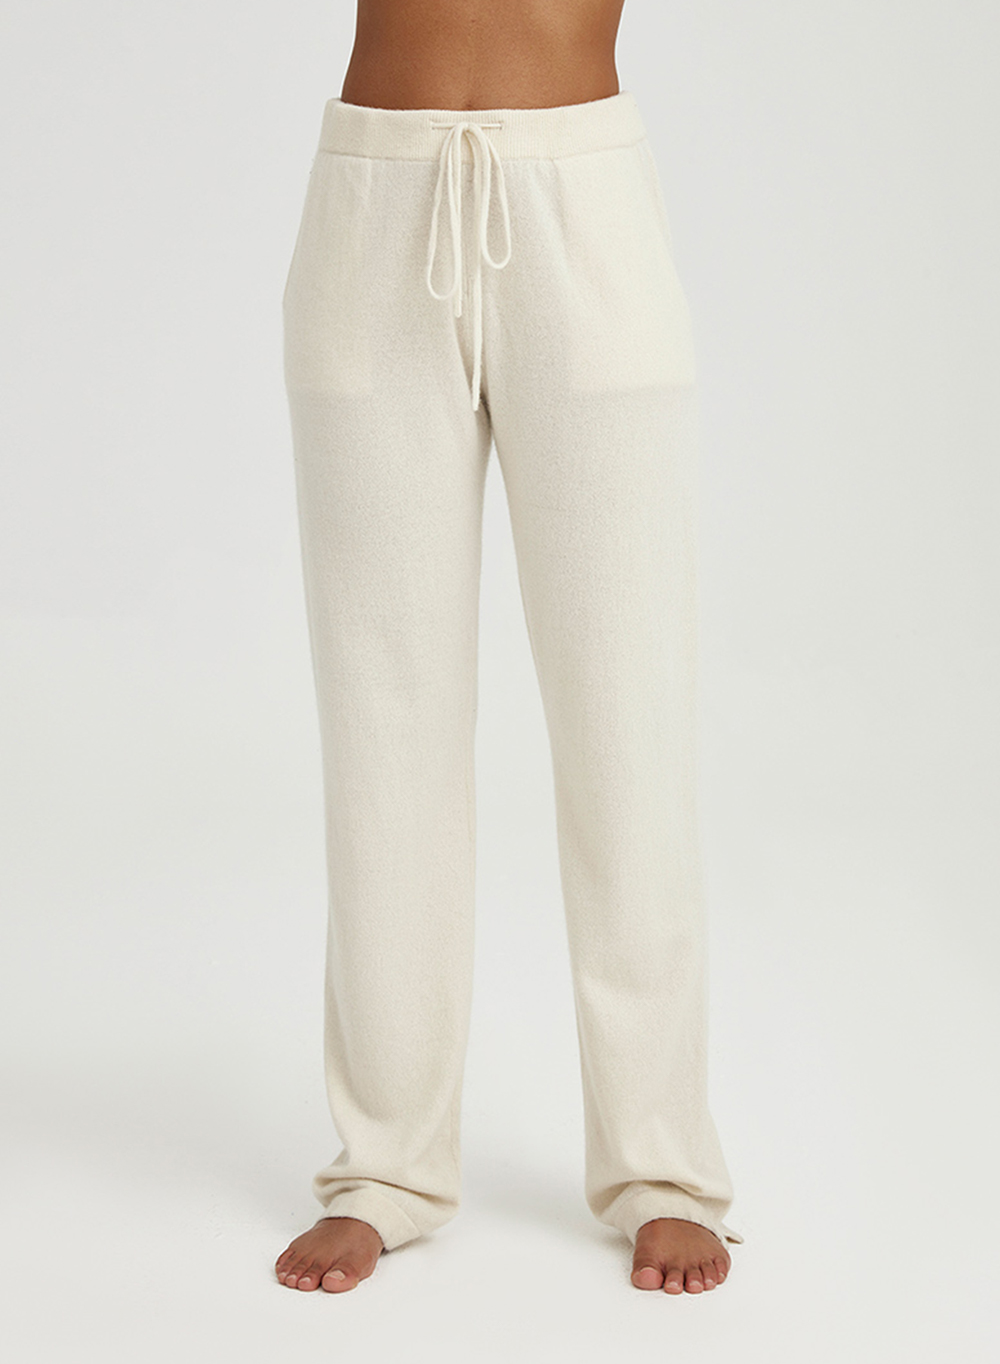 White Straight-Leg Cashmere Pants